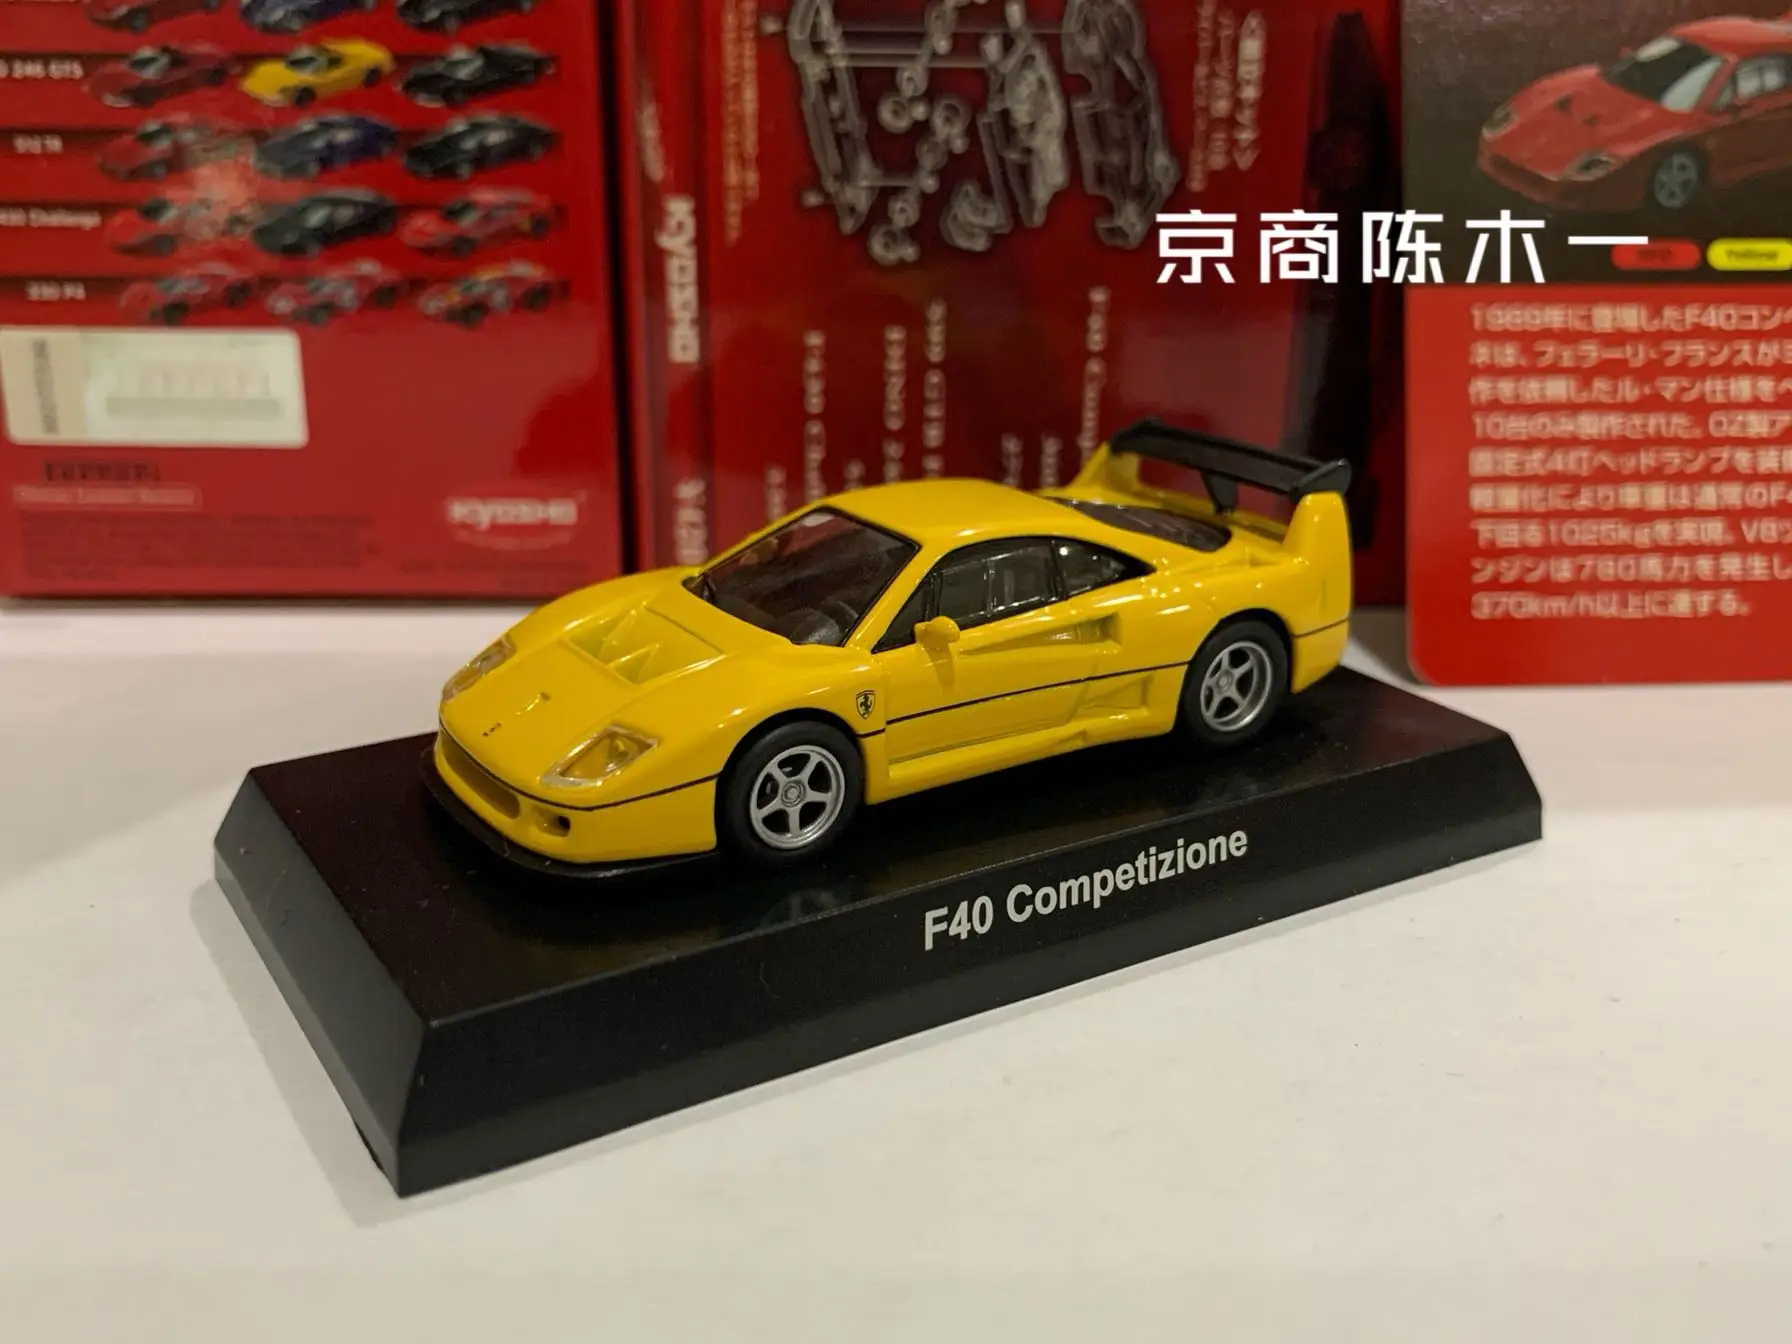 

1/64 KYOSHO Ferrari F40 Competizione Collection of die-cast alloy car decoration model toys